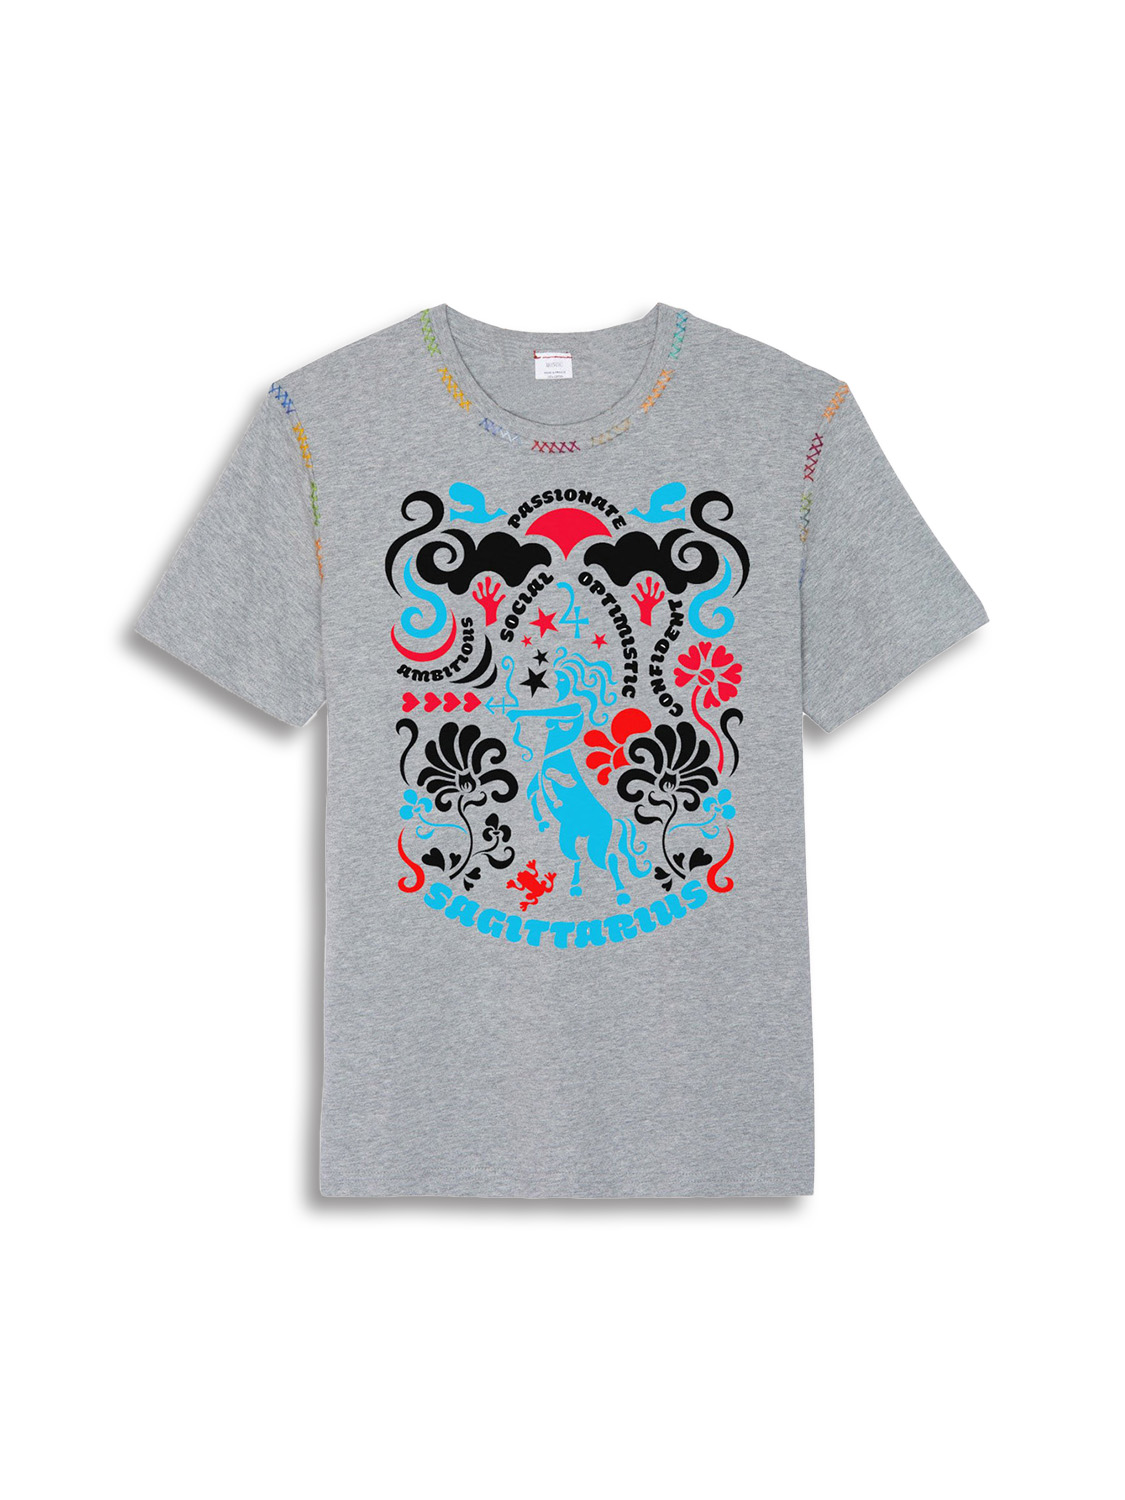 Astro Shirt - Cotton T-Shirt with Zodiac Print